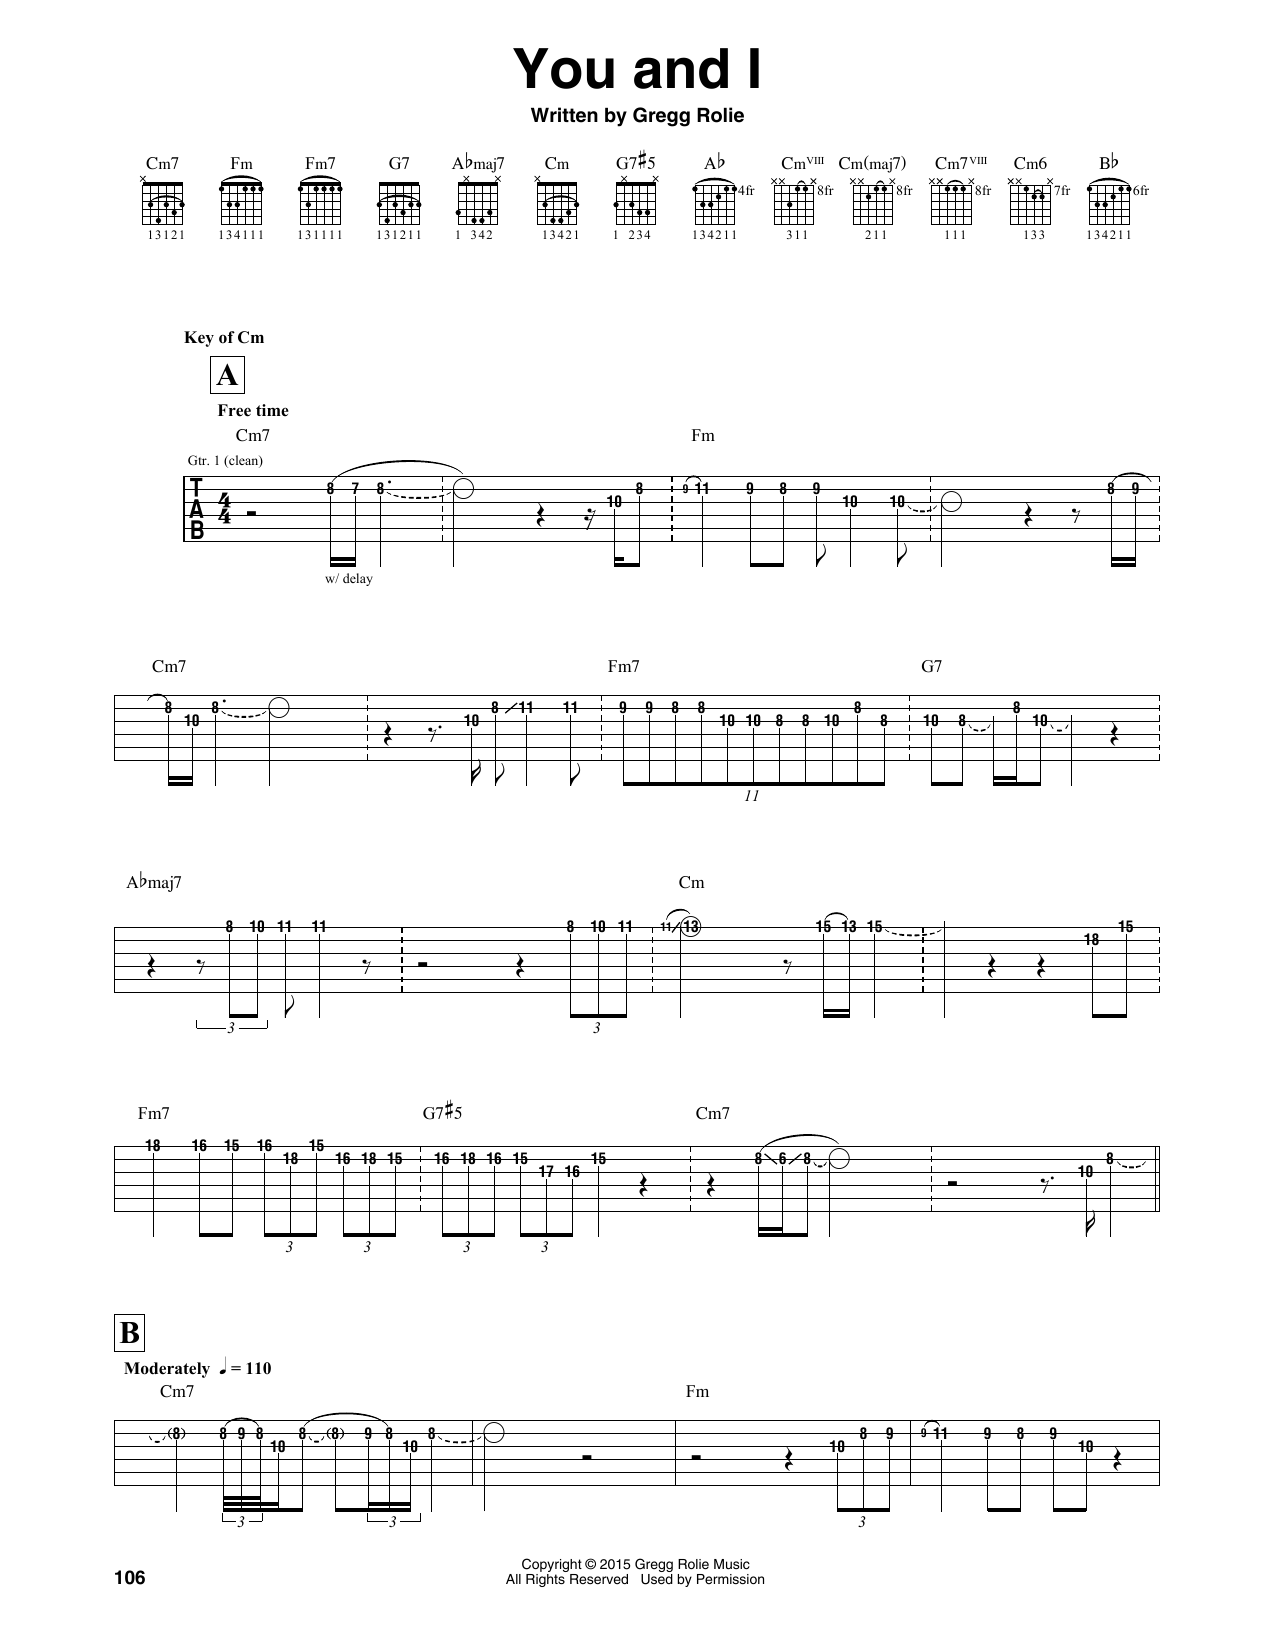 Santana You And I Sheet Music Notes & Chords for Guitar Tab - Download or Print PDF